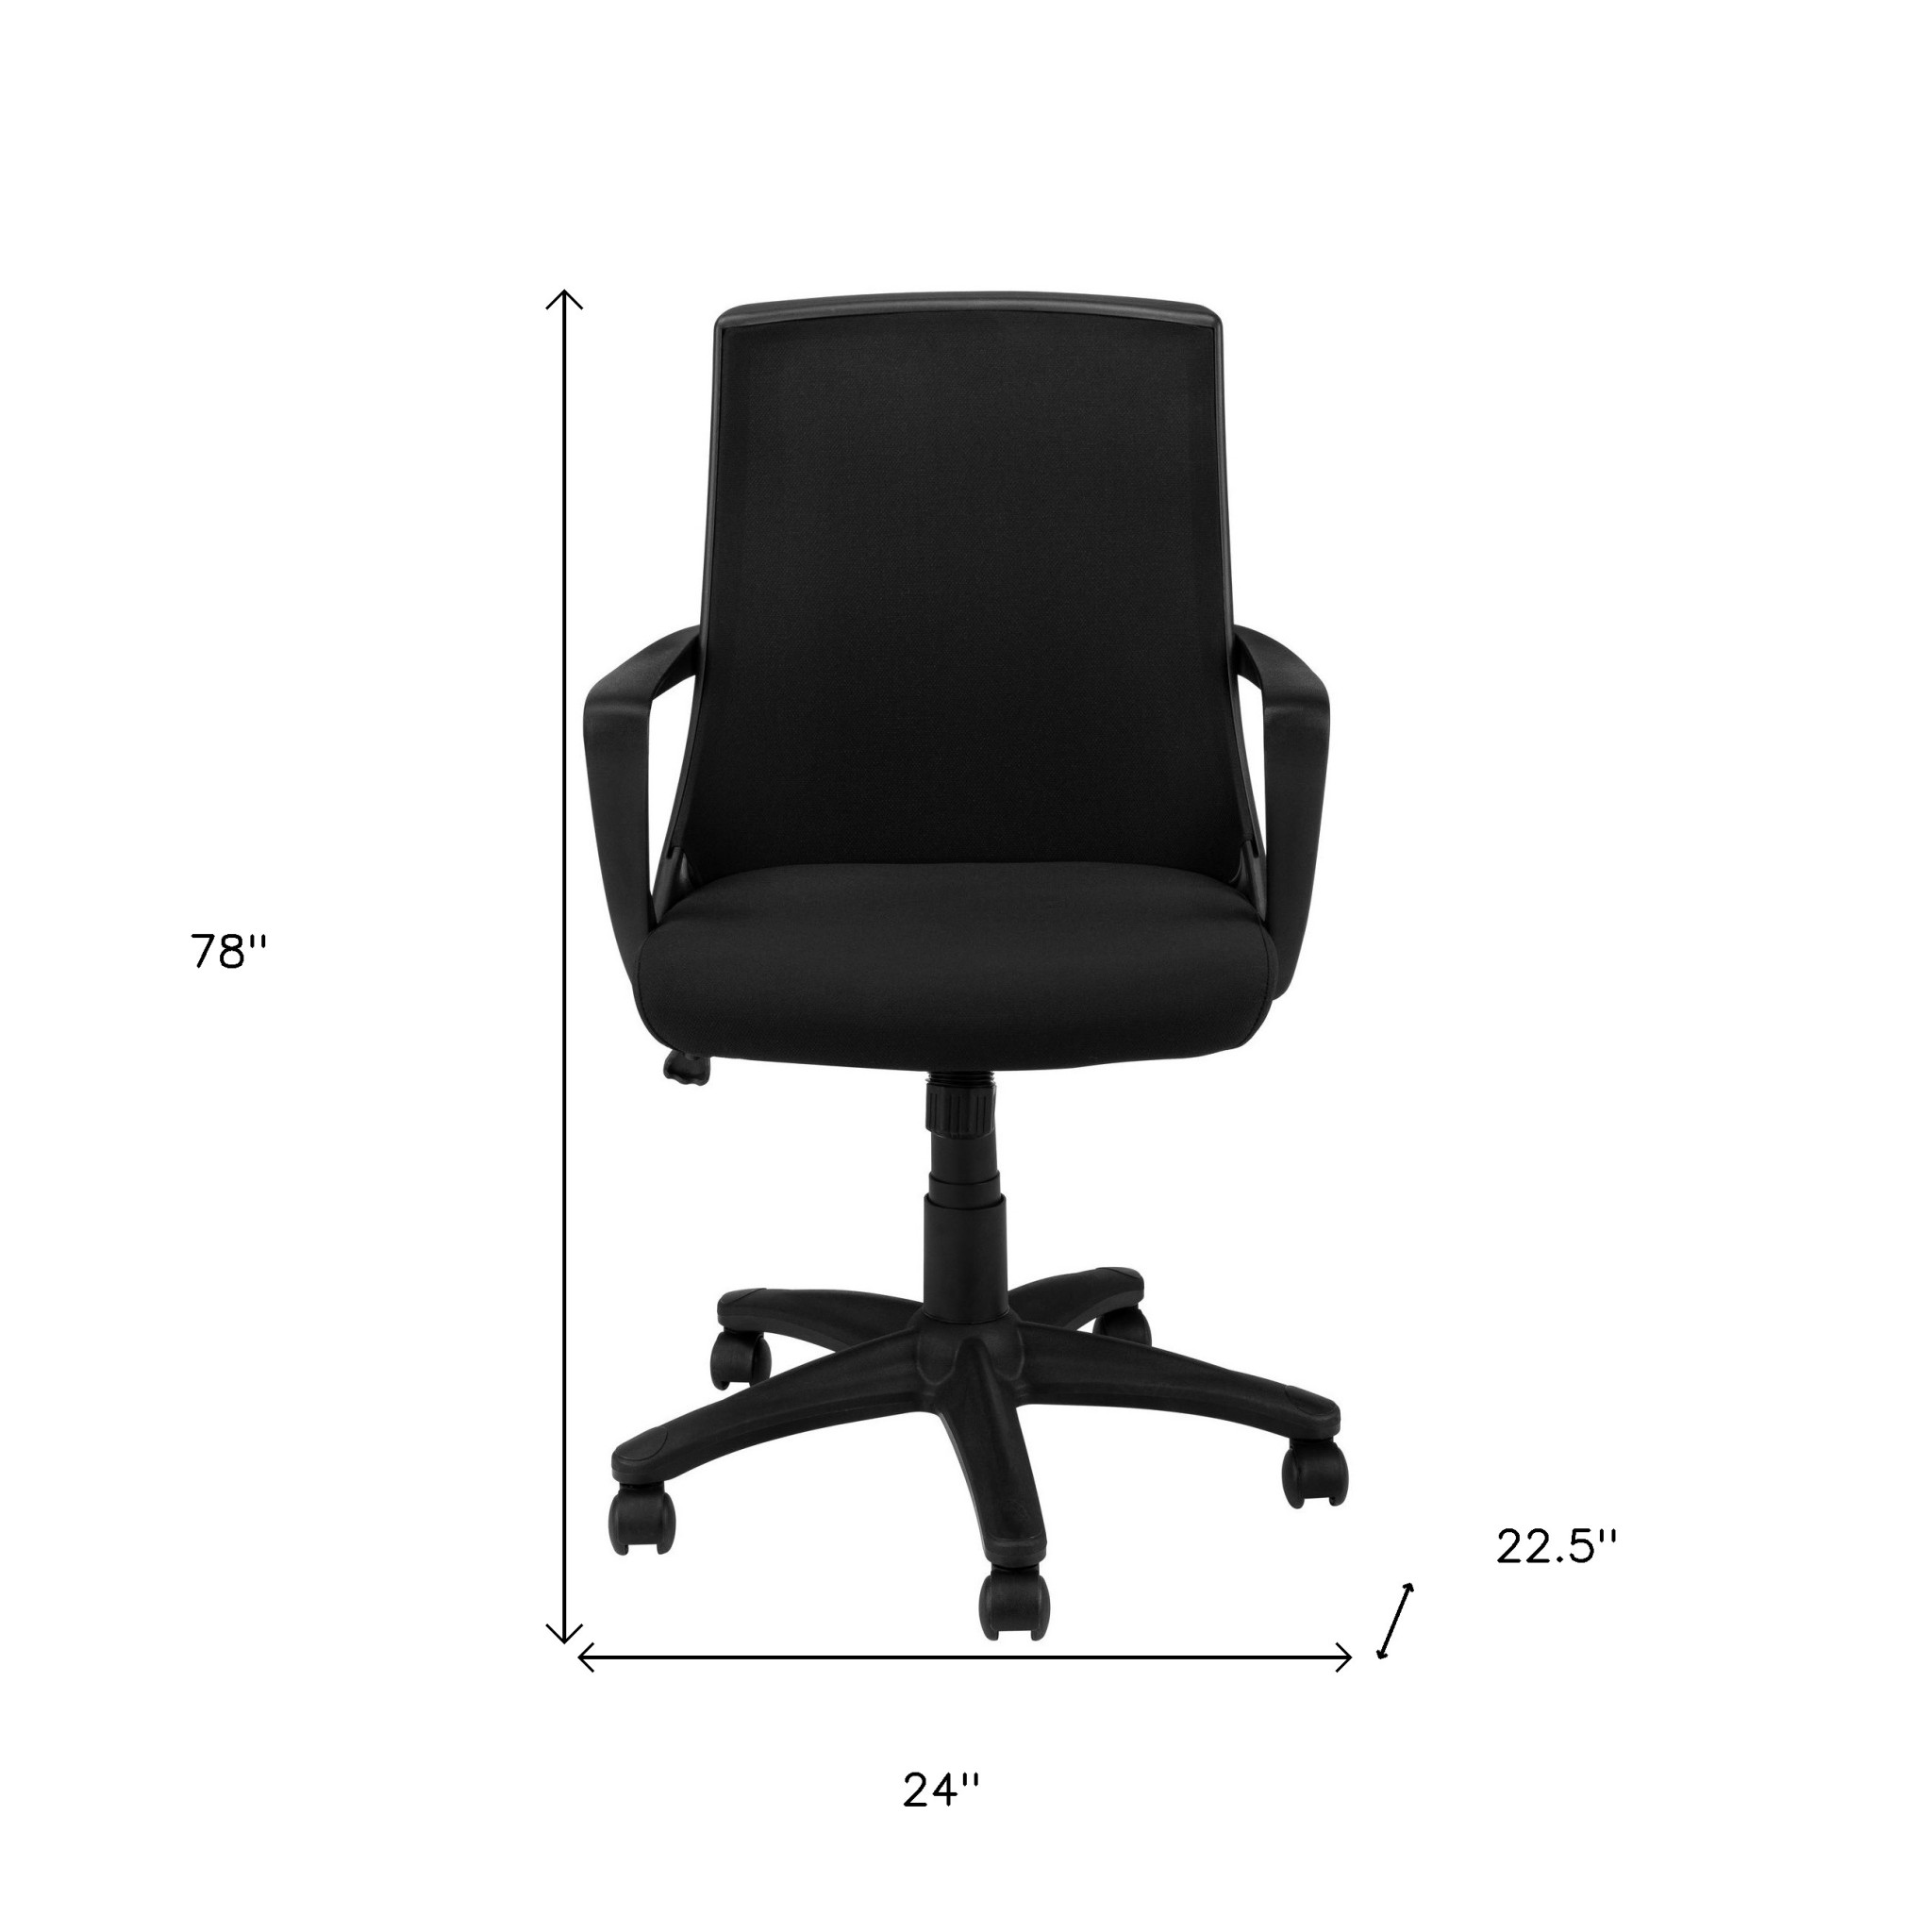 24" x 22.5" x 78" Black Foam Mdf Metal Multi Position Office Chair